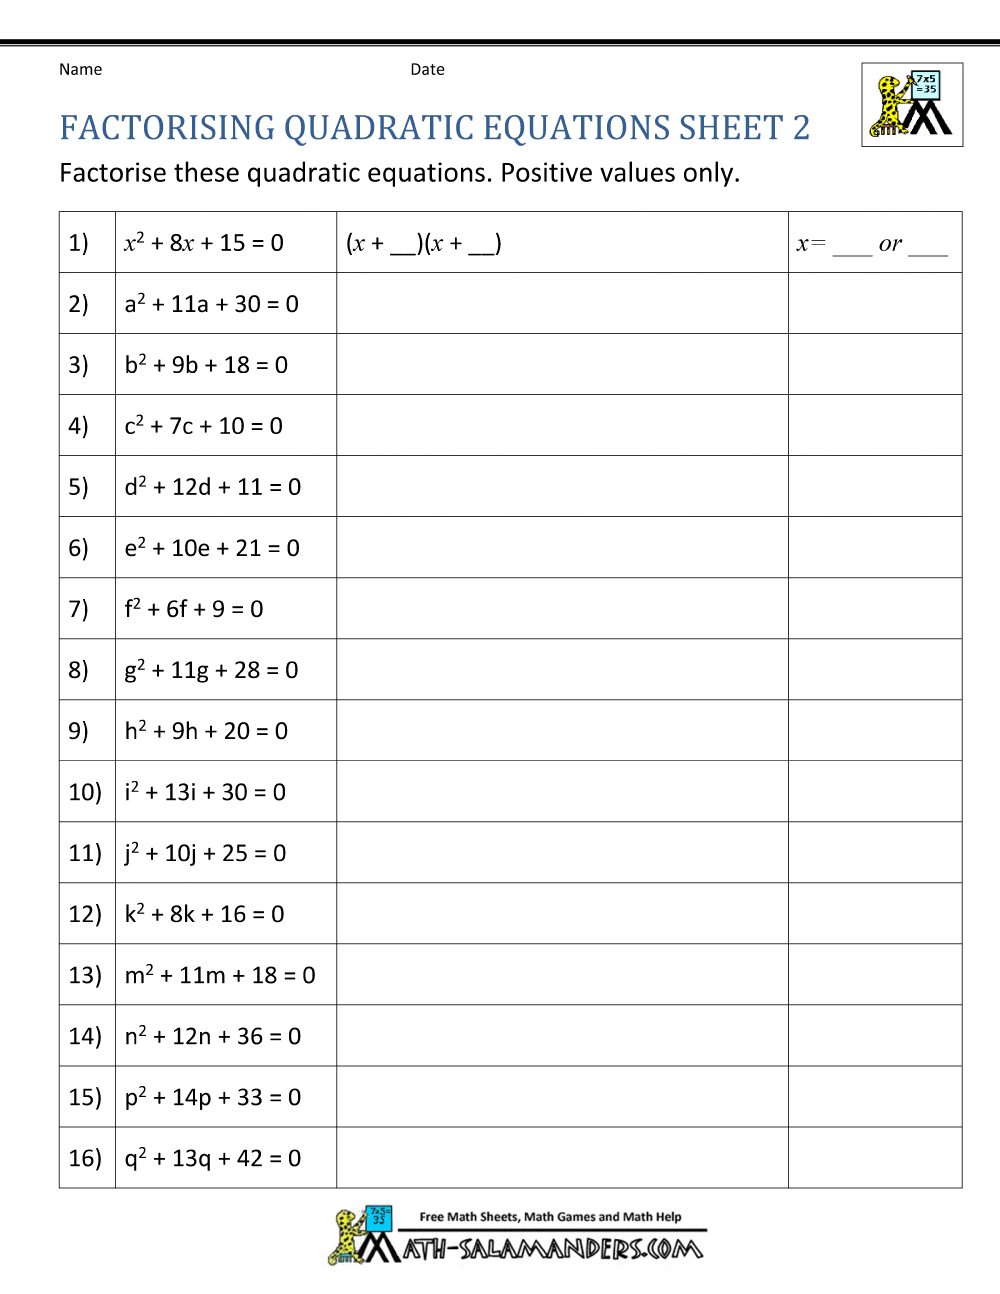 Factoring Quadratic Equations In Algebra 2 Factoring Worksheet